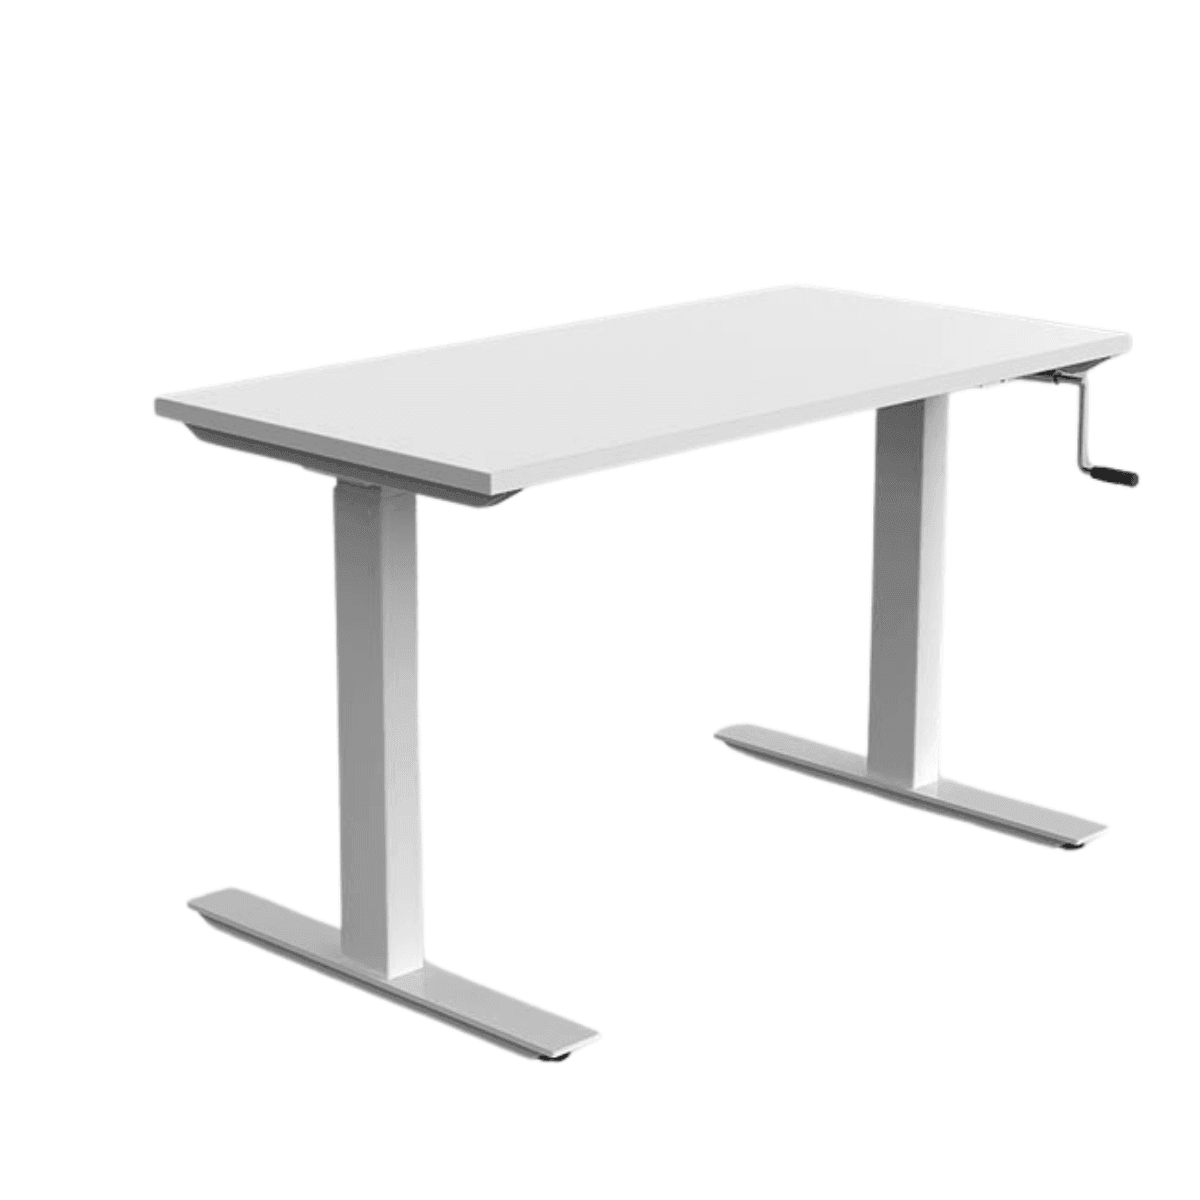 Agile Winder Height Adjustable Desk - Office Furniture Company 